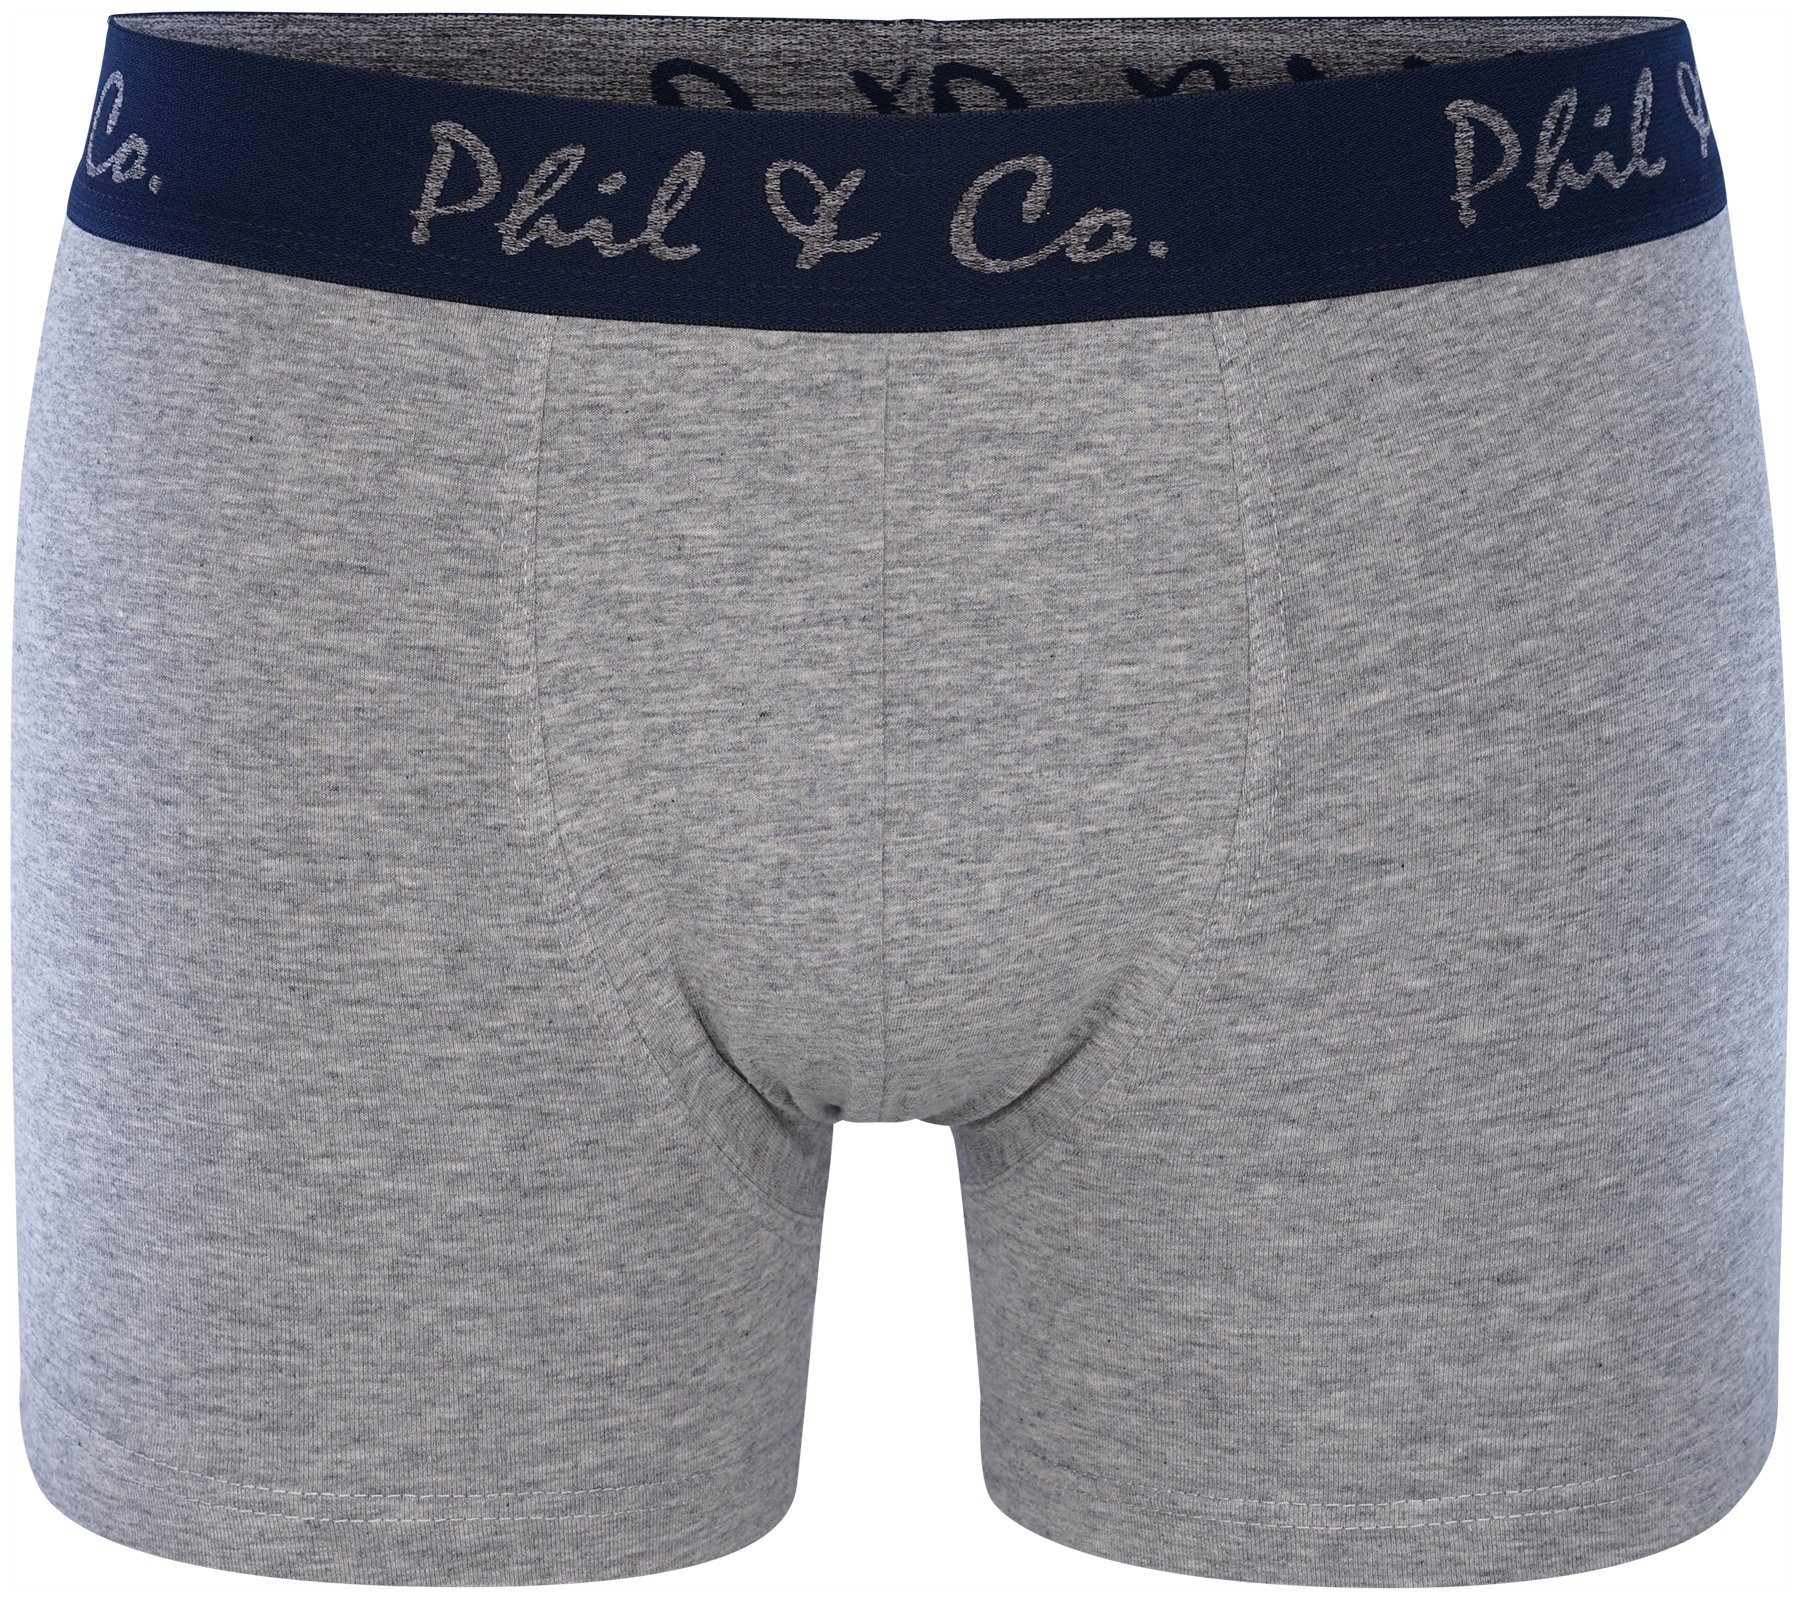 Retropants (Navy/Grau) 2-Pack Phil 'Jersey' Pants Retro Co. &